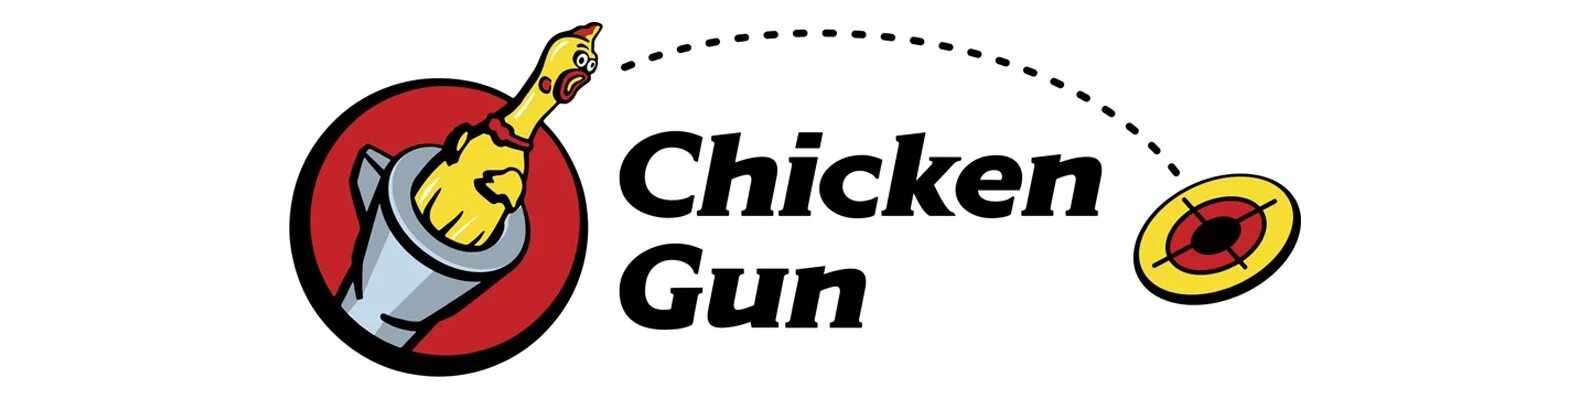 Chicken gun 4.1 0. Chicken Gun. Chicken Gun Пермь. Чикен Ган логотип. Чикен Ган последняя версия.